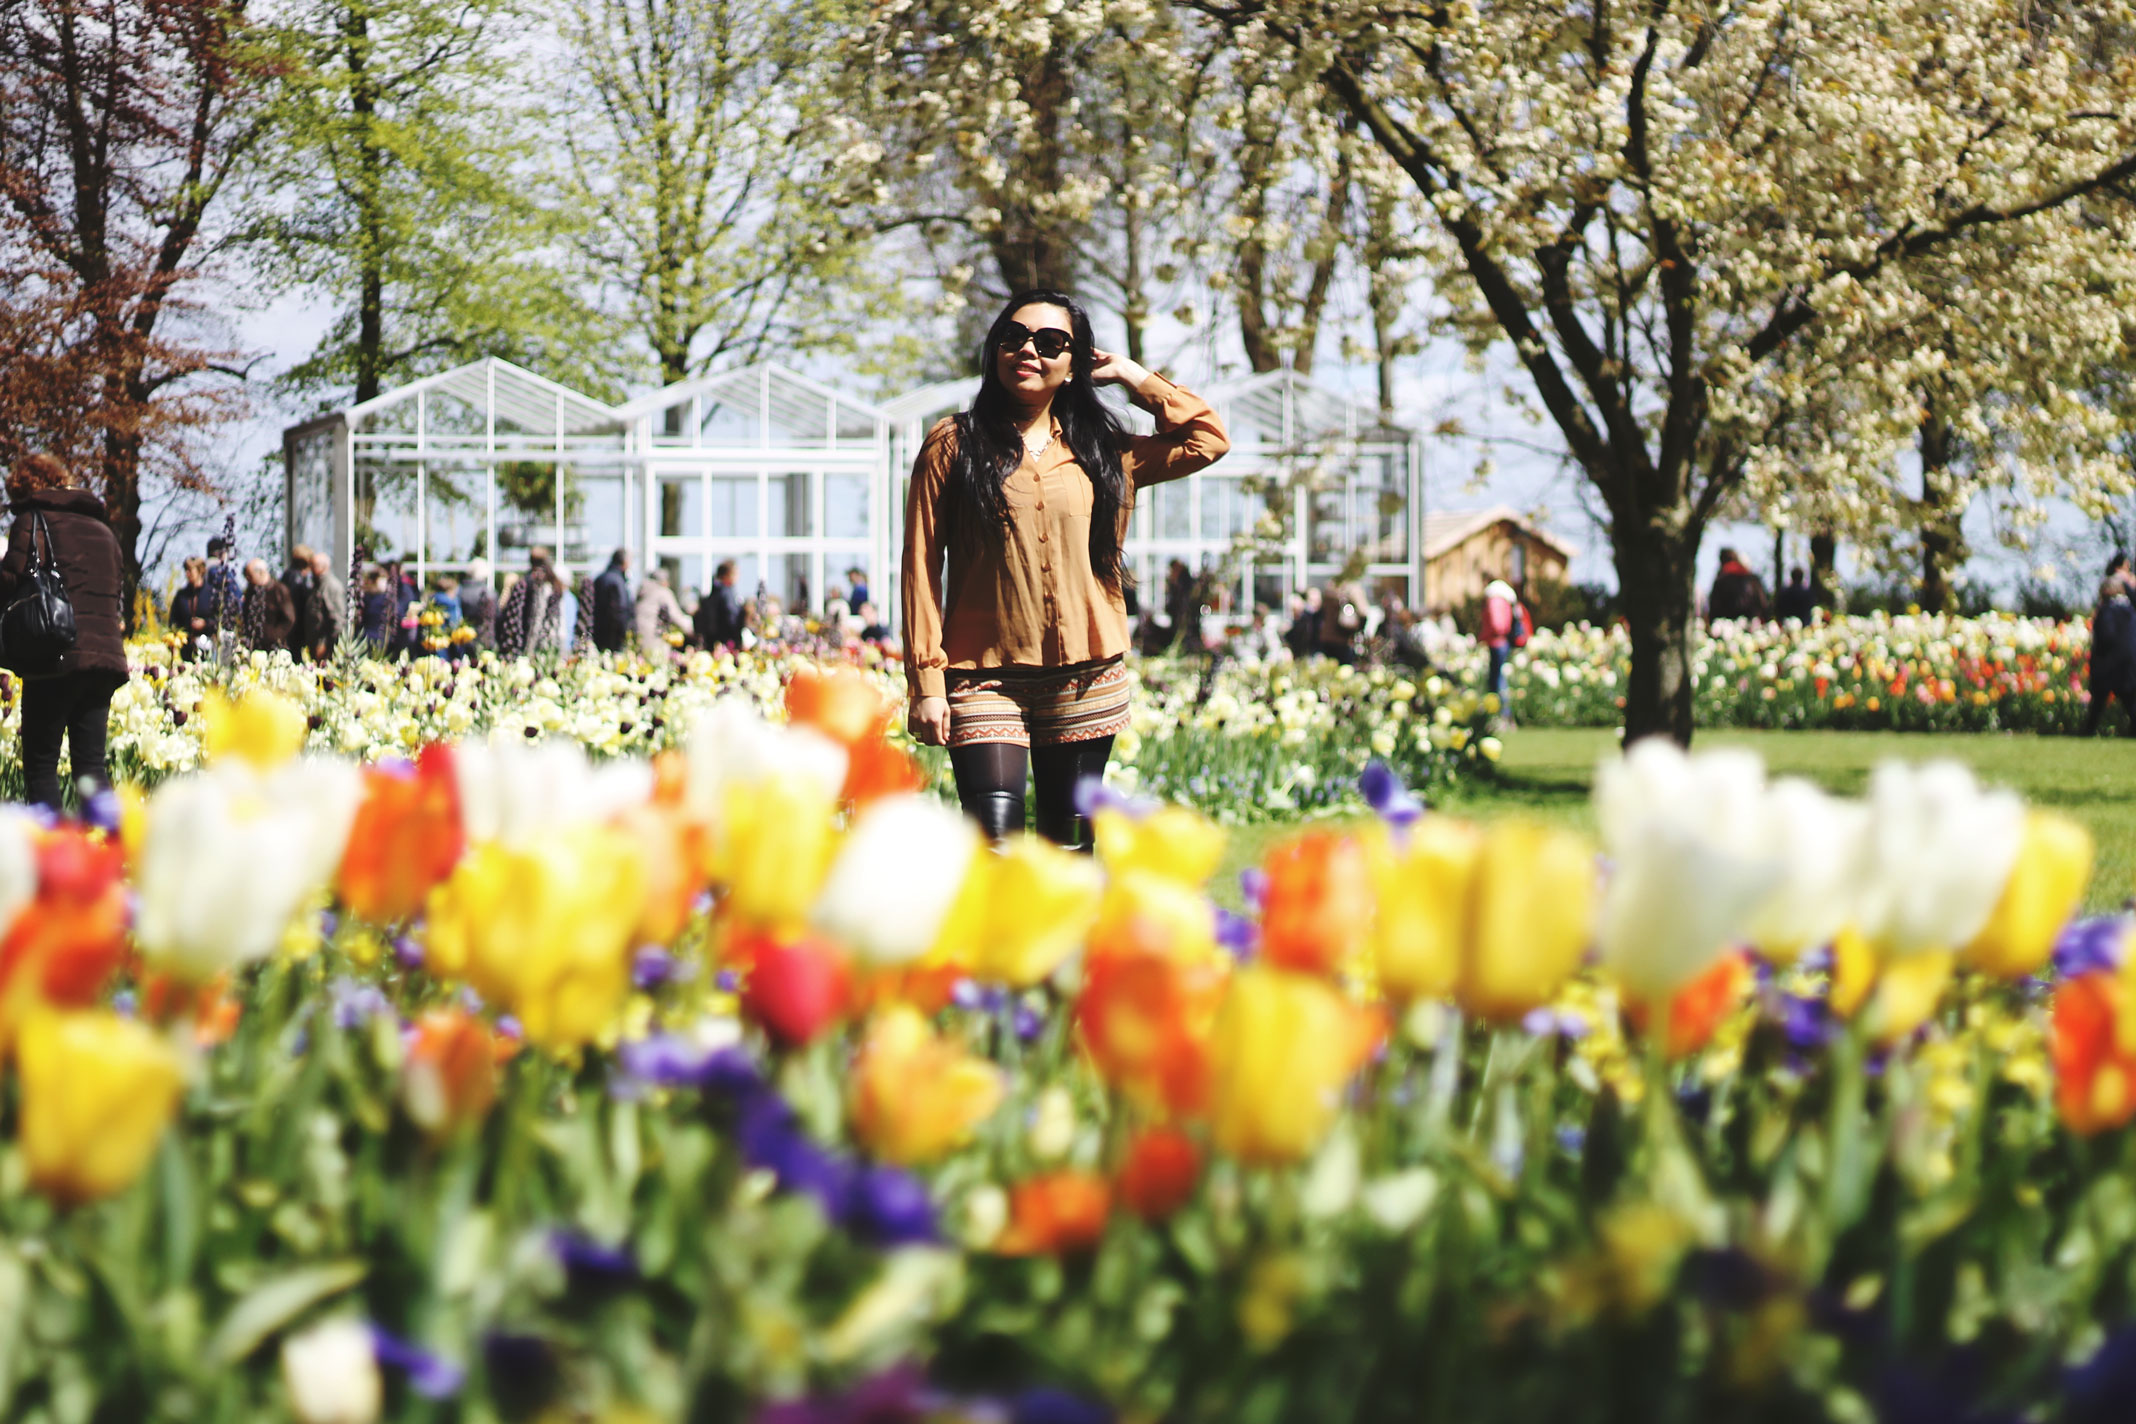 STYLEAT30 Travel + Fashion Blog - Keukenhof Gardens and Tulip Fields Tour from Amsterdam - Holland Tulips - 25